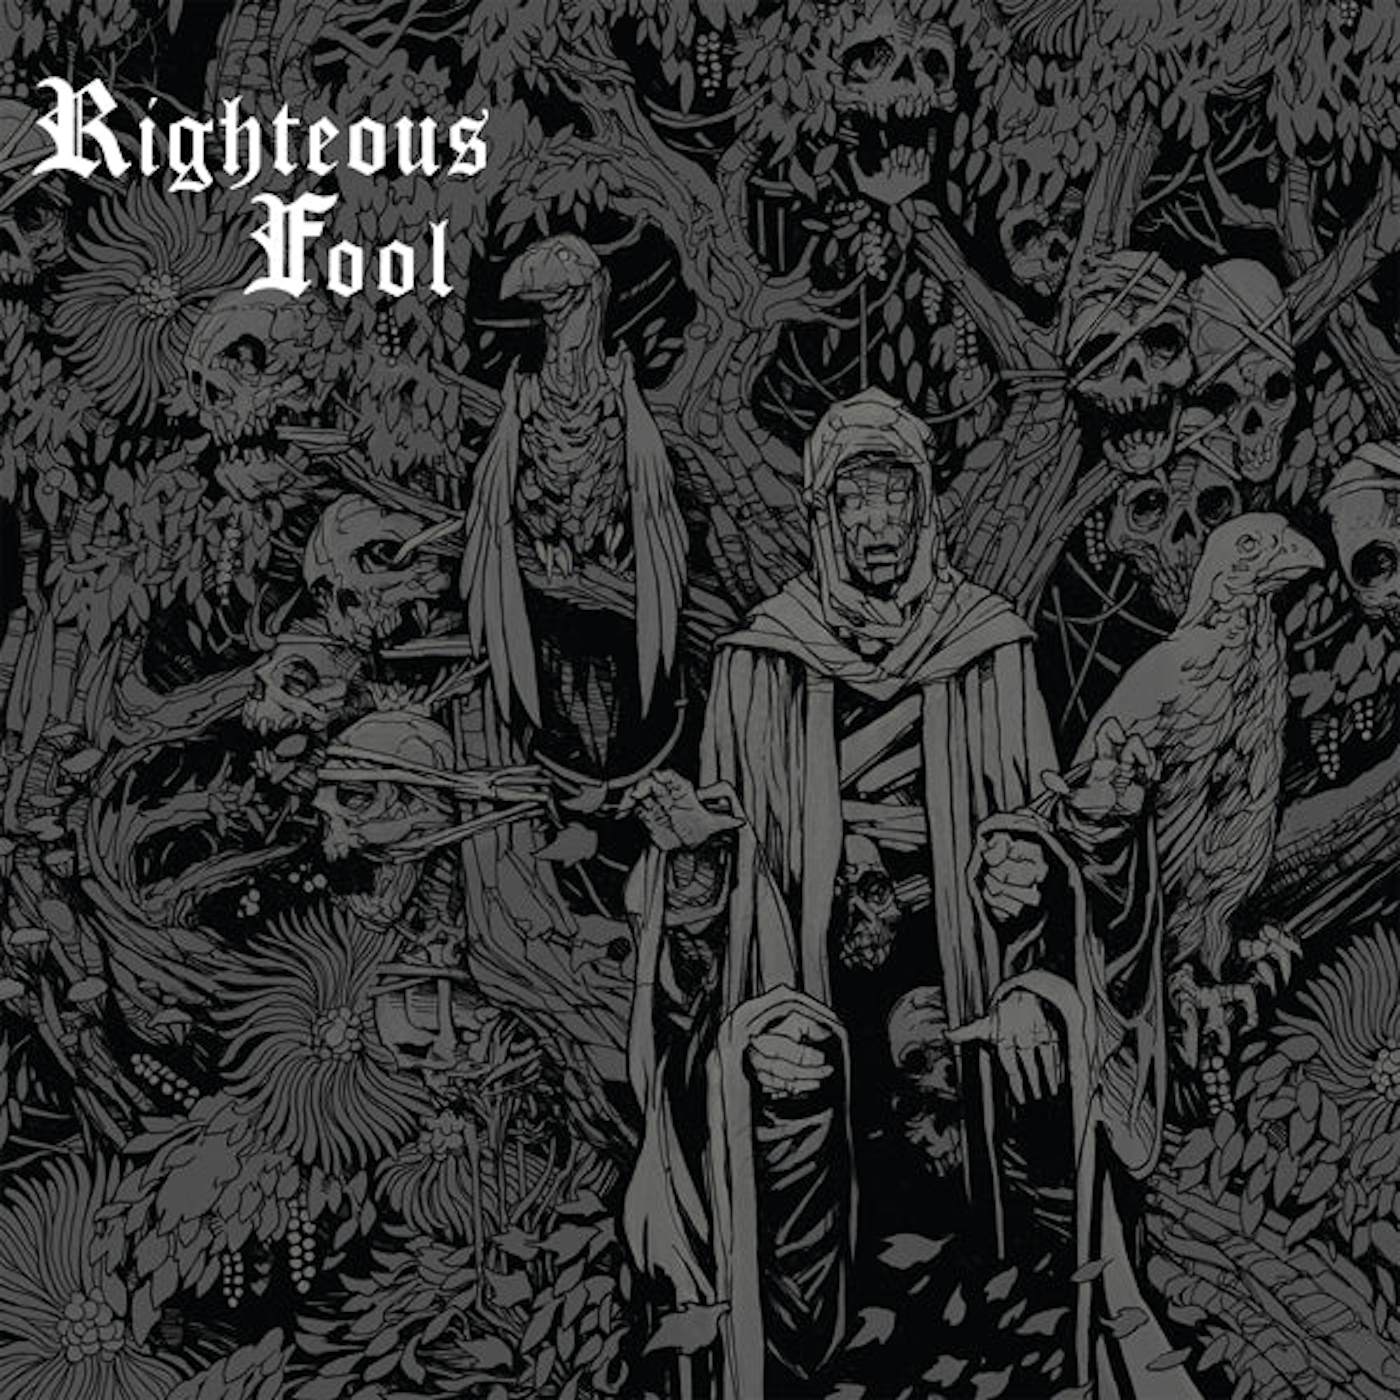 Righteous Fool LP - Righteous Fool (Vinyl)